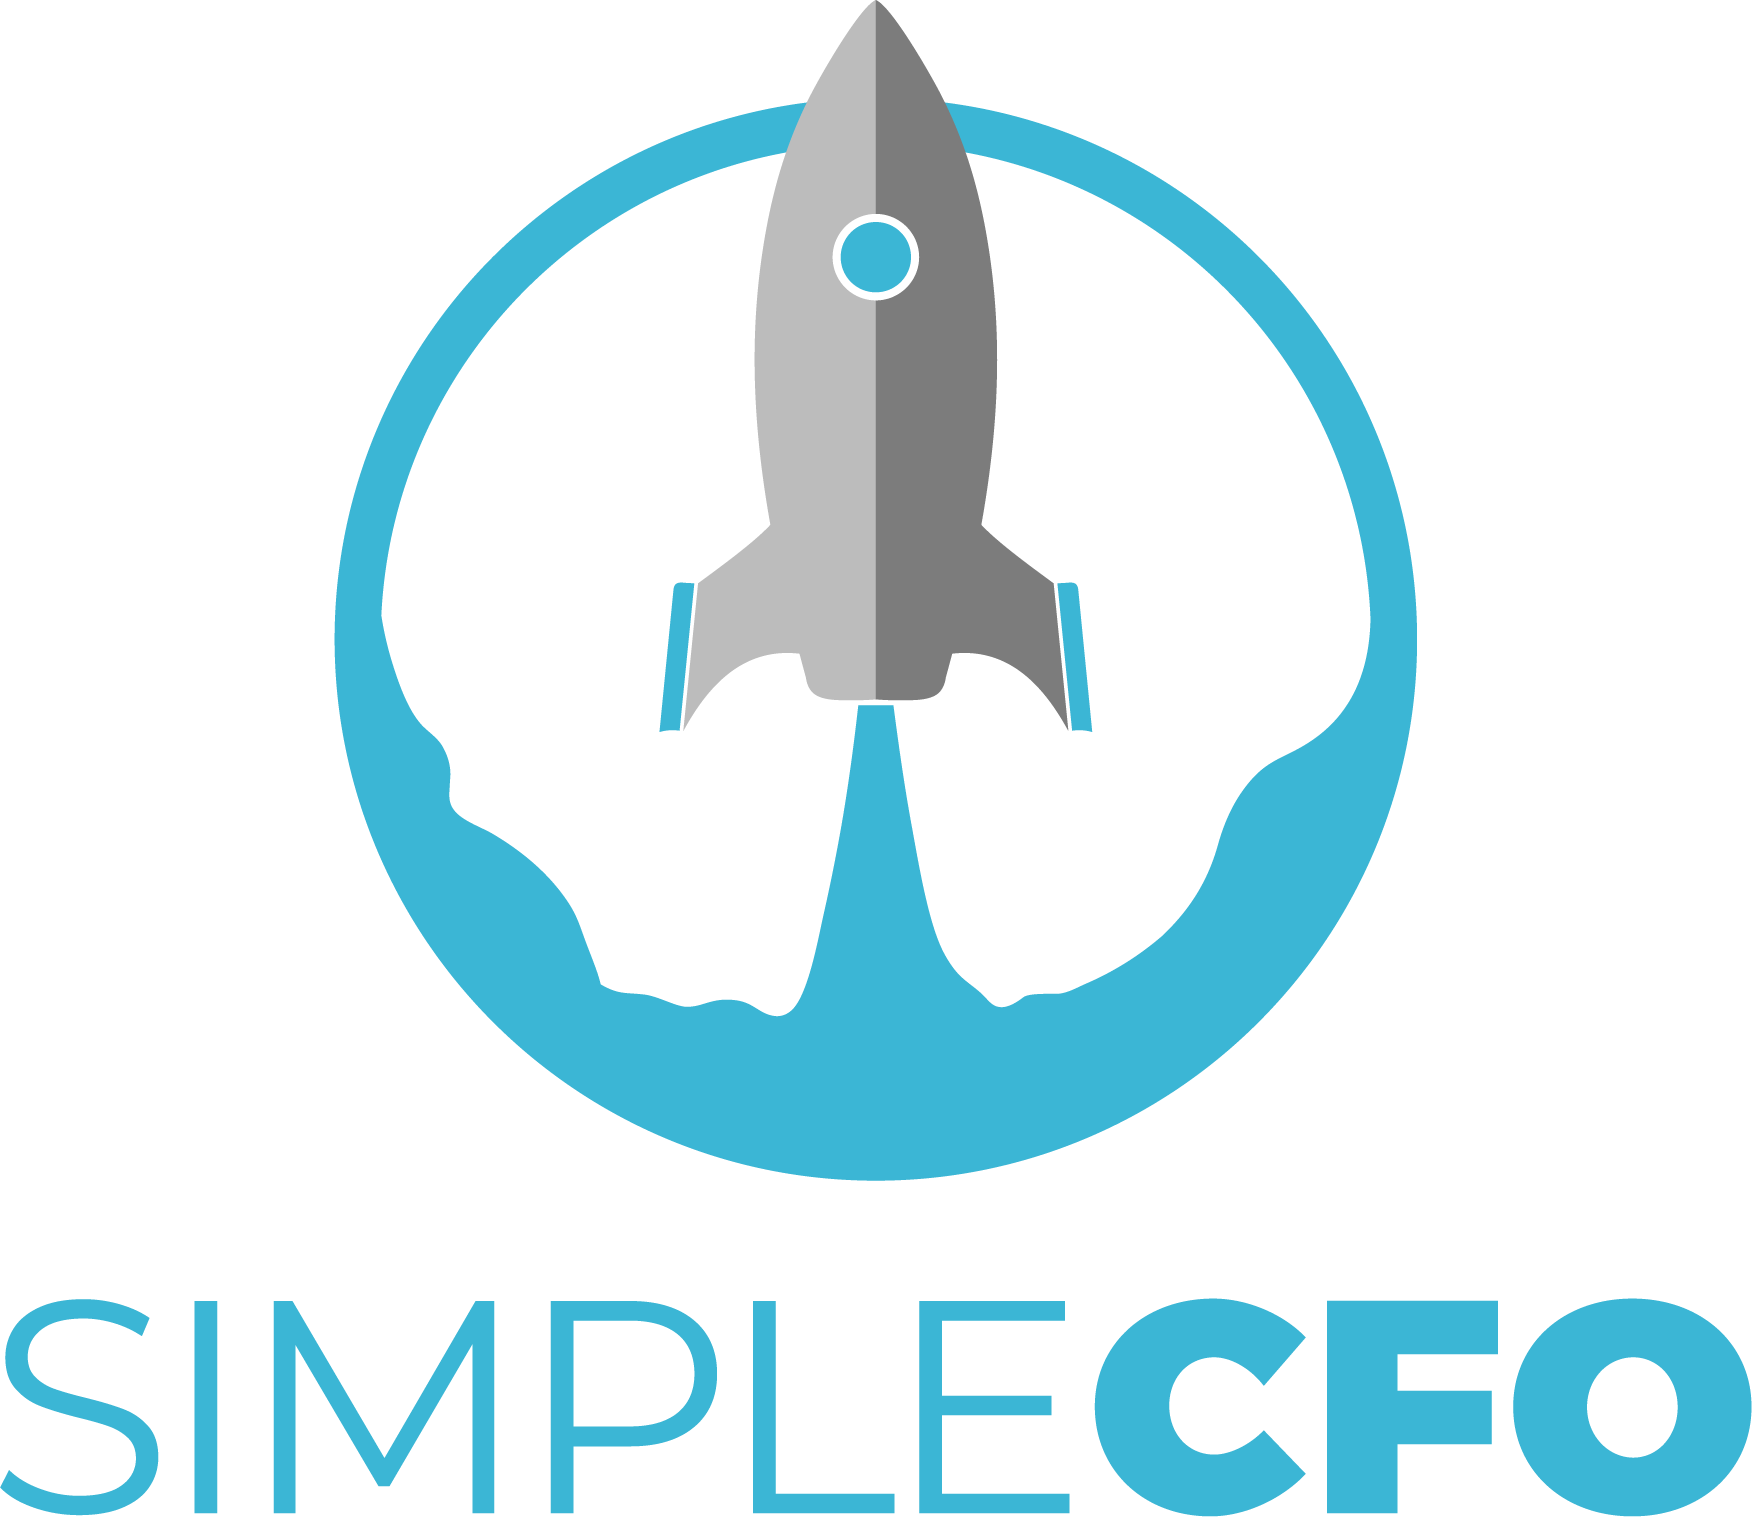 simplecfo logo version 2@2x